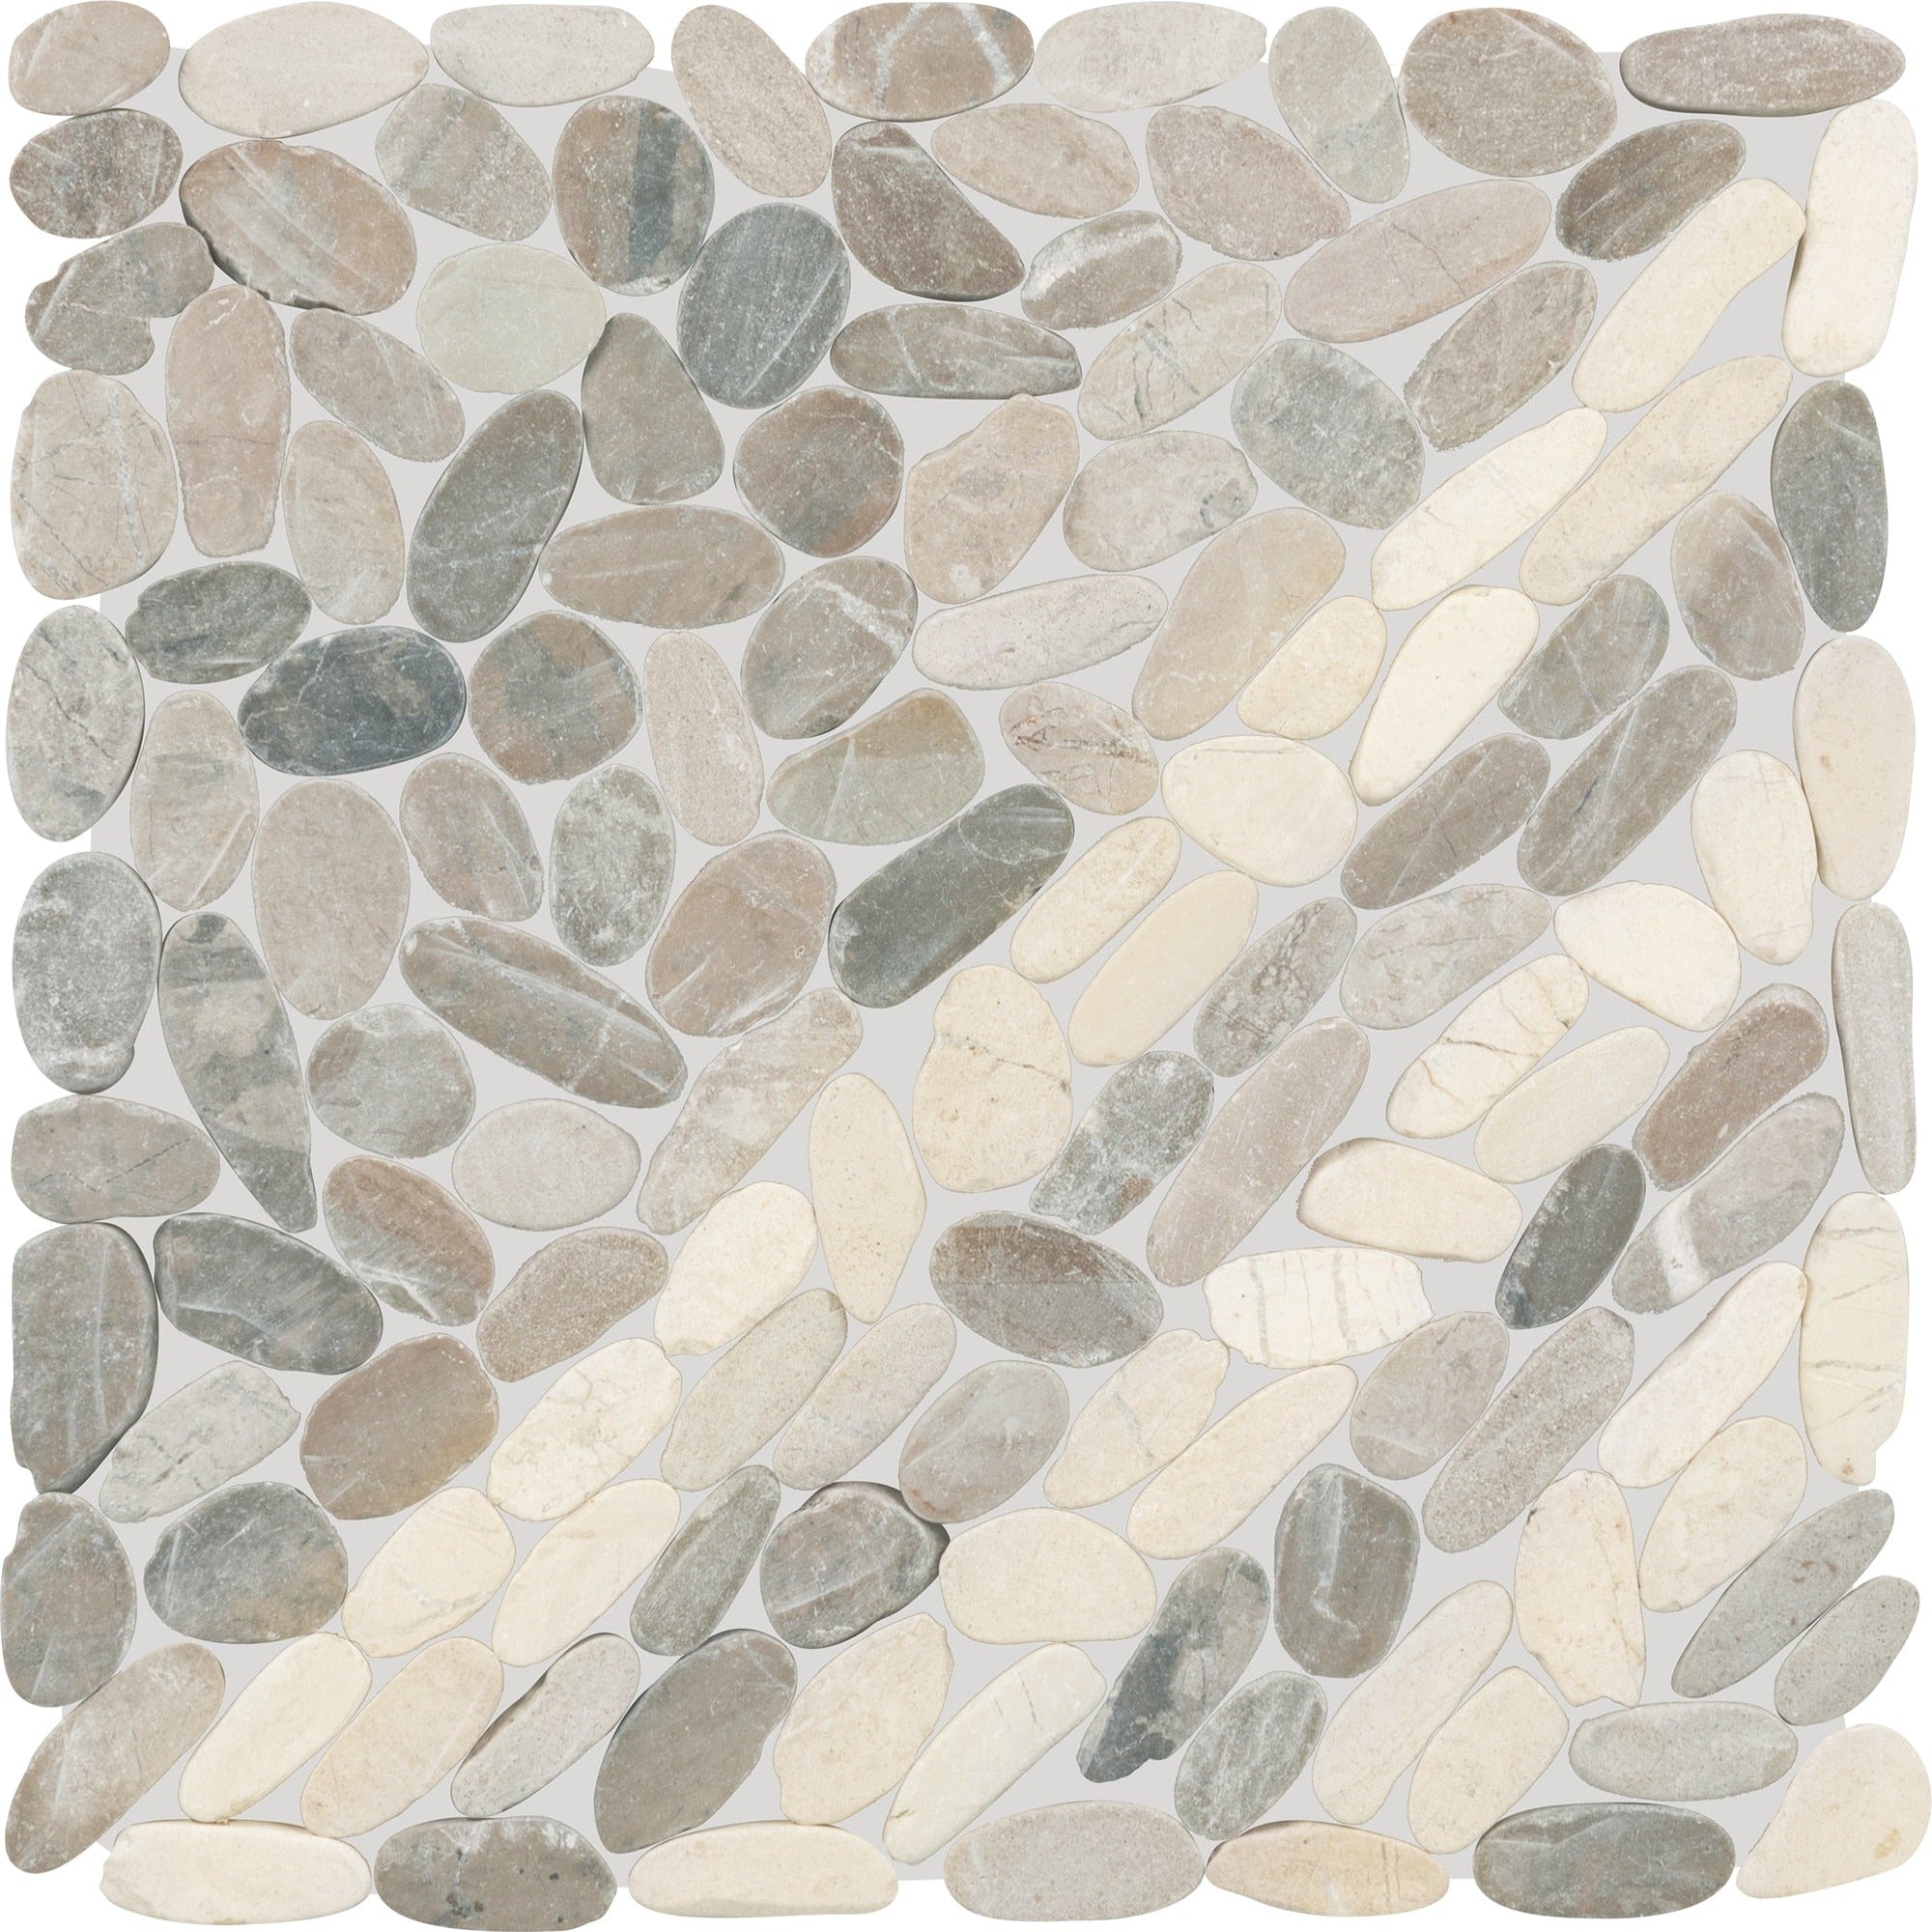 Daltile - Pebble Oasis Natural Stone Mosaic - Striped Pebble - Coal